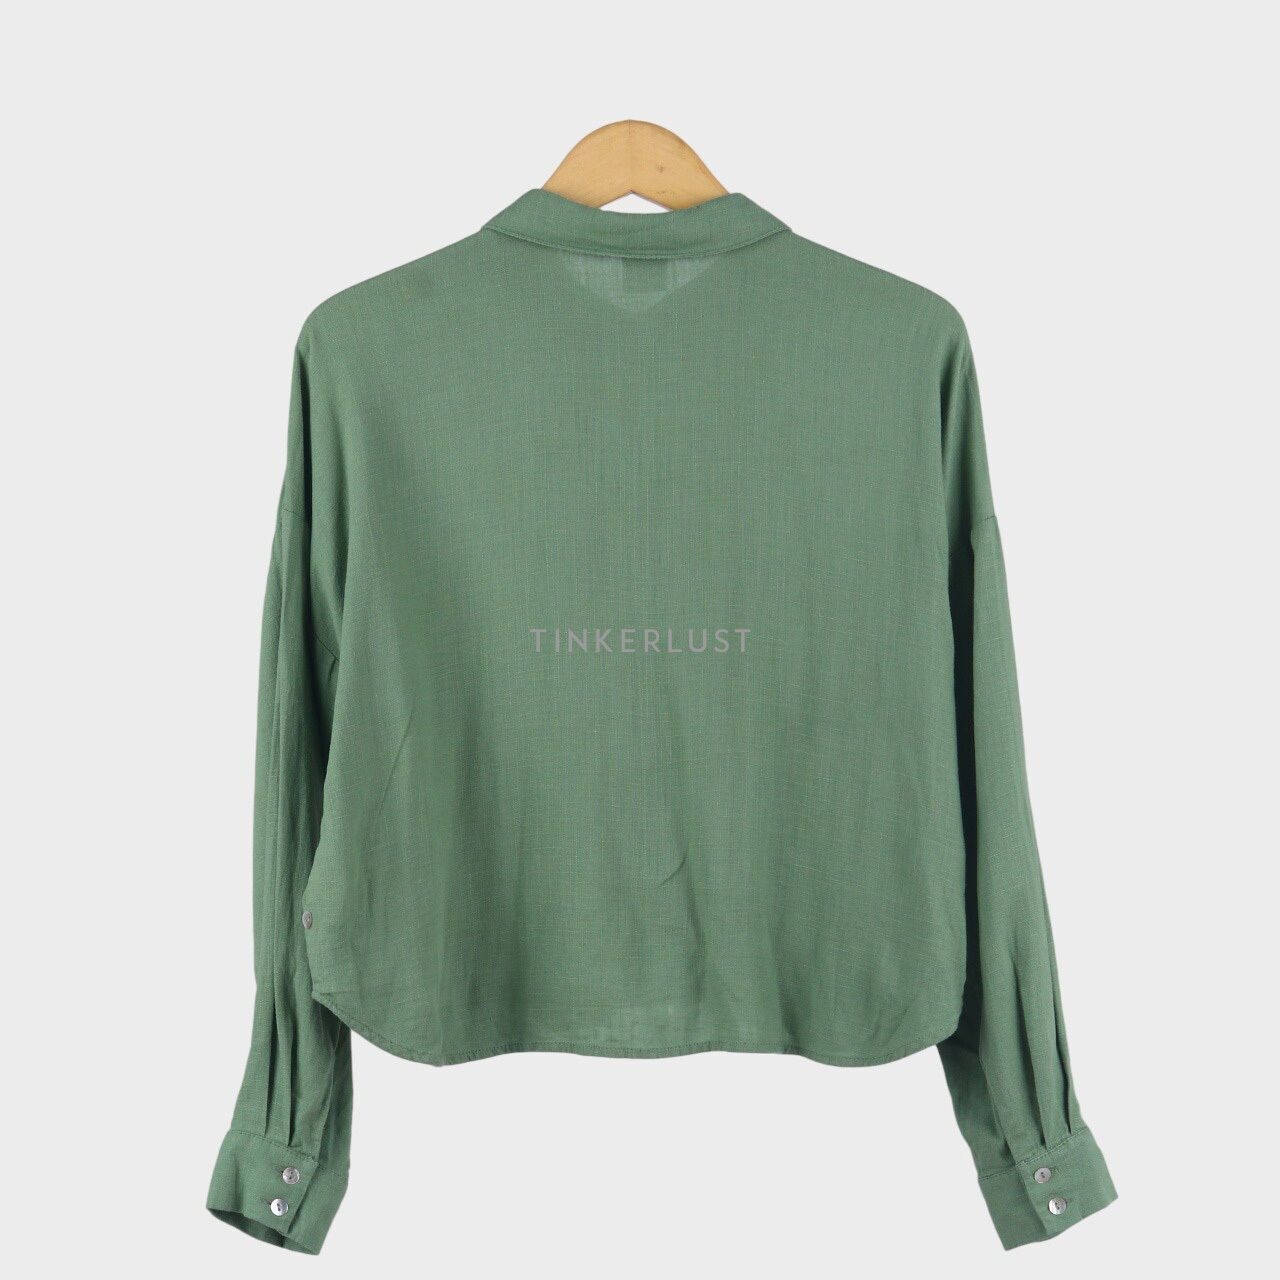 Kivee Green Shirt